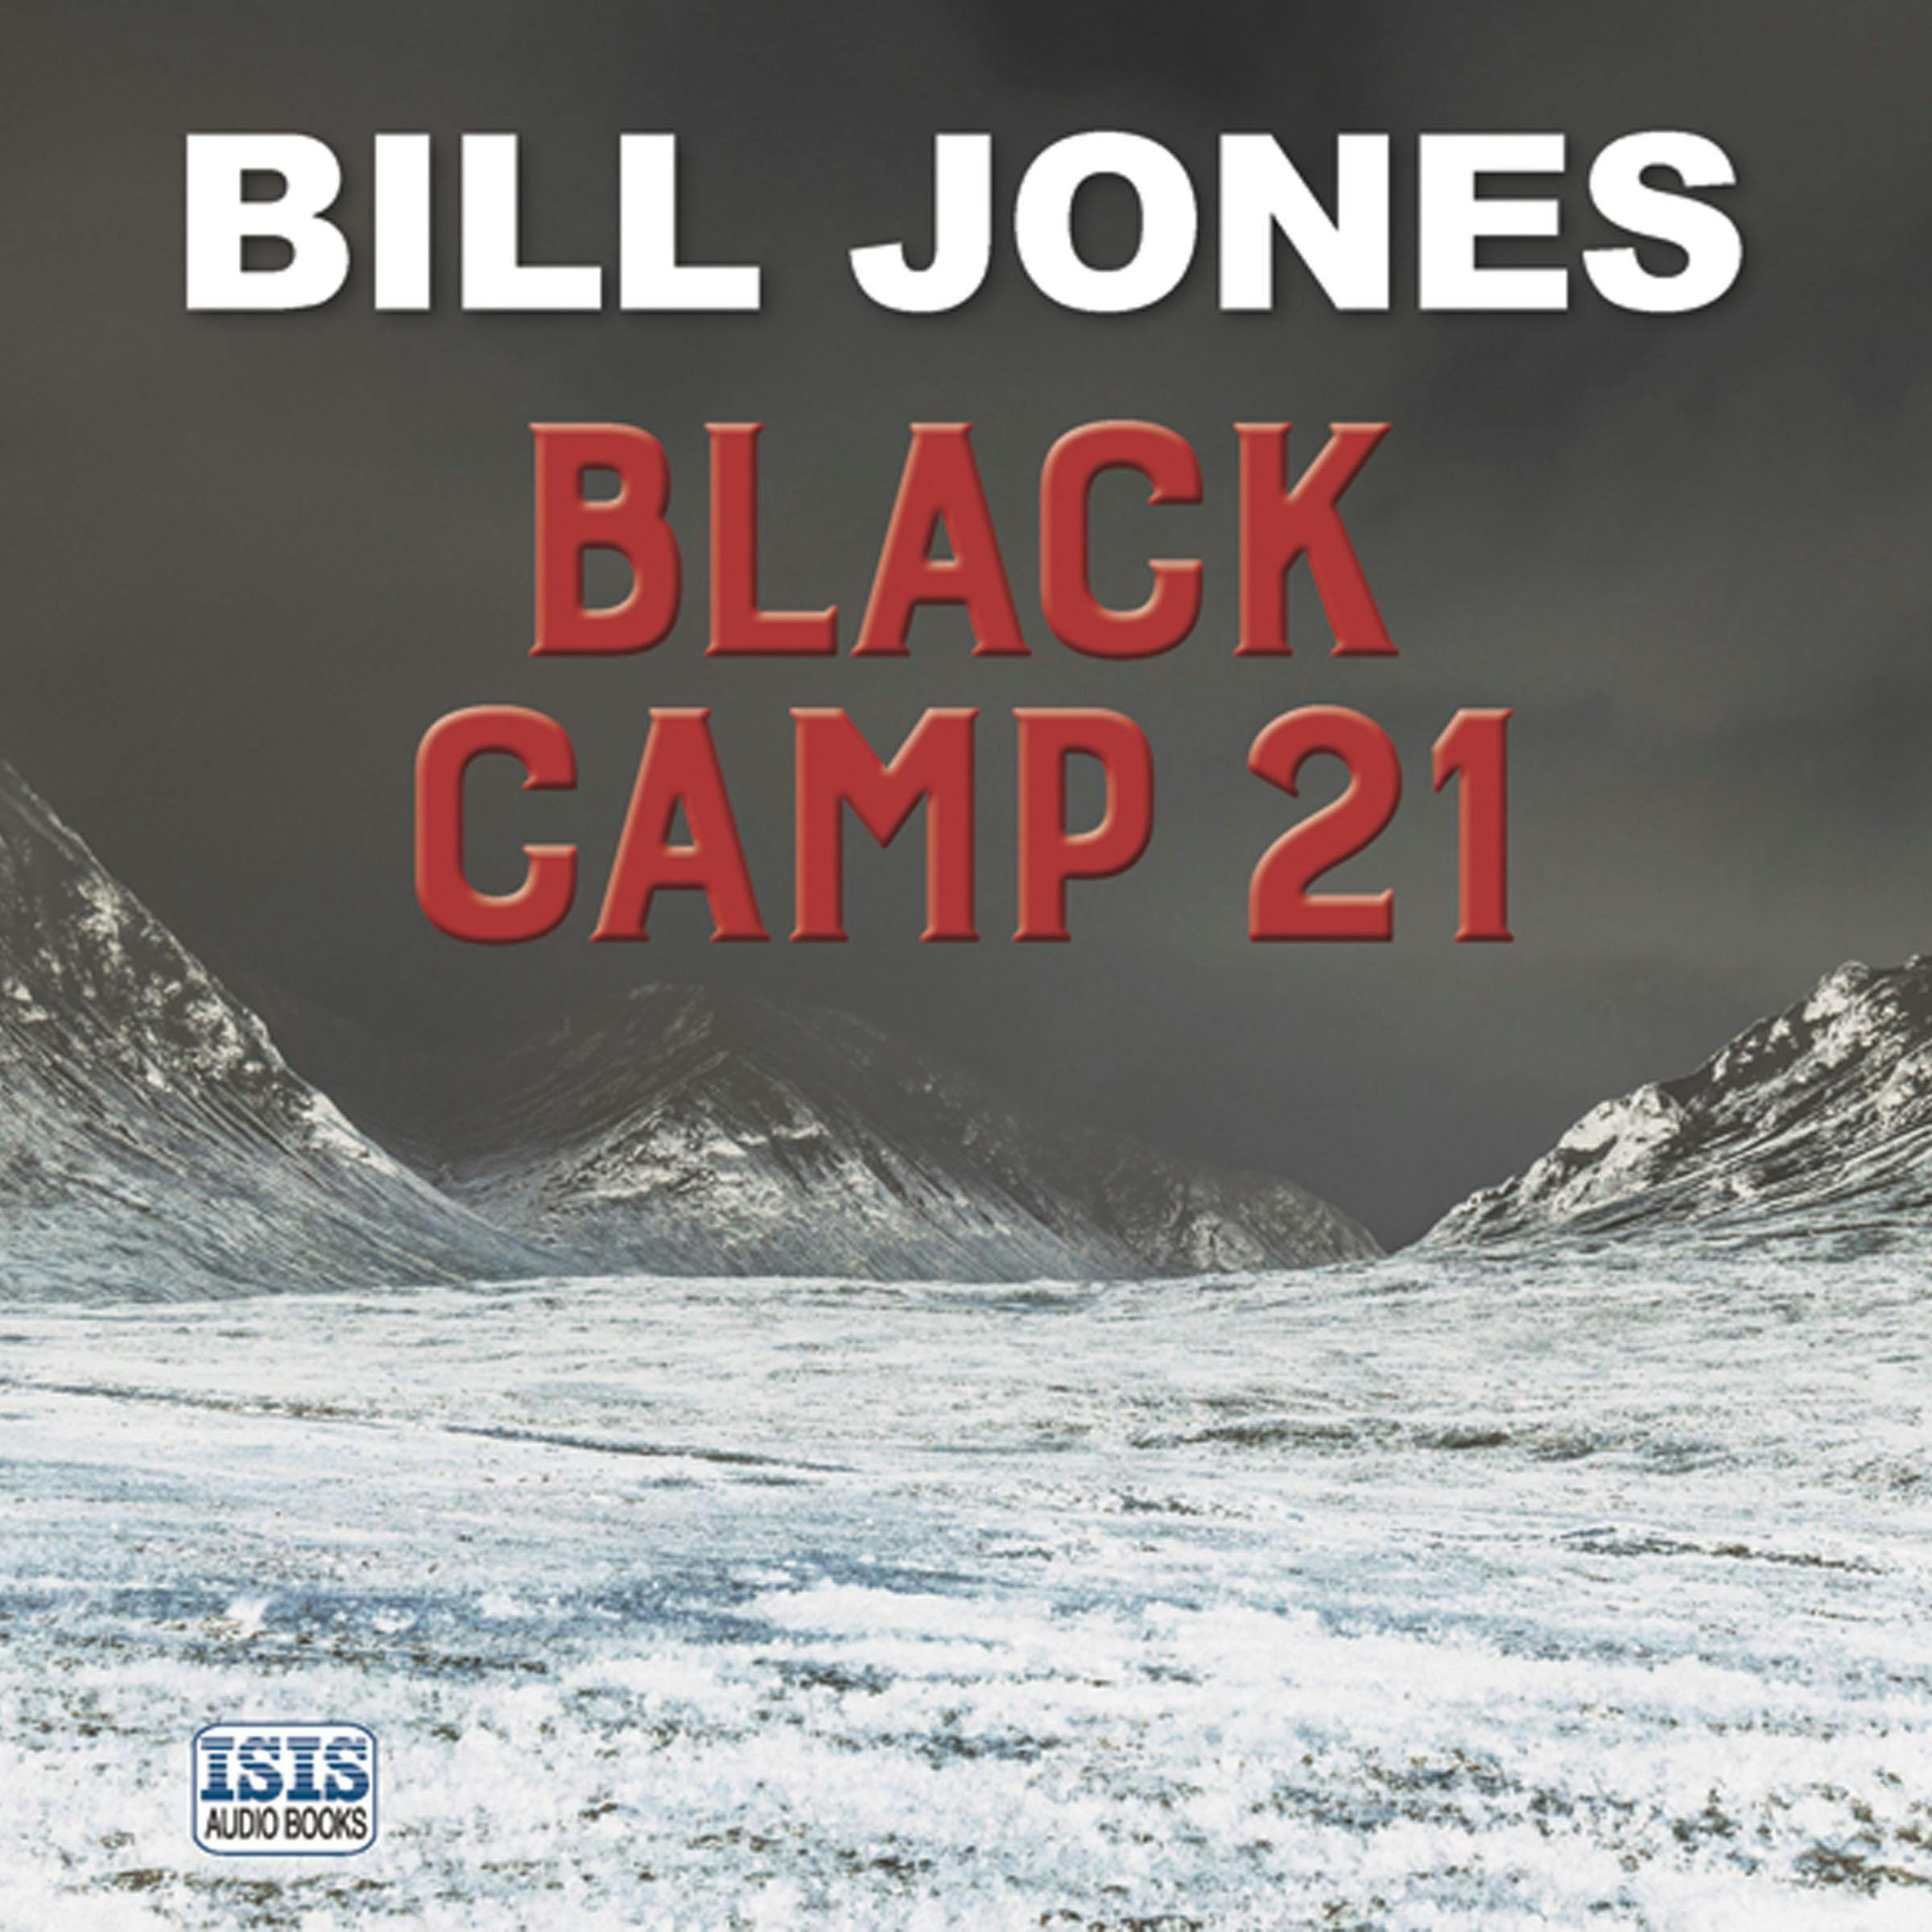 Black Camp 21 - Bill Jones